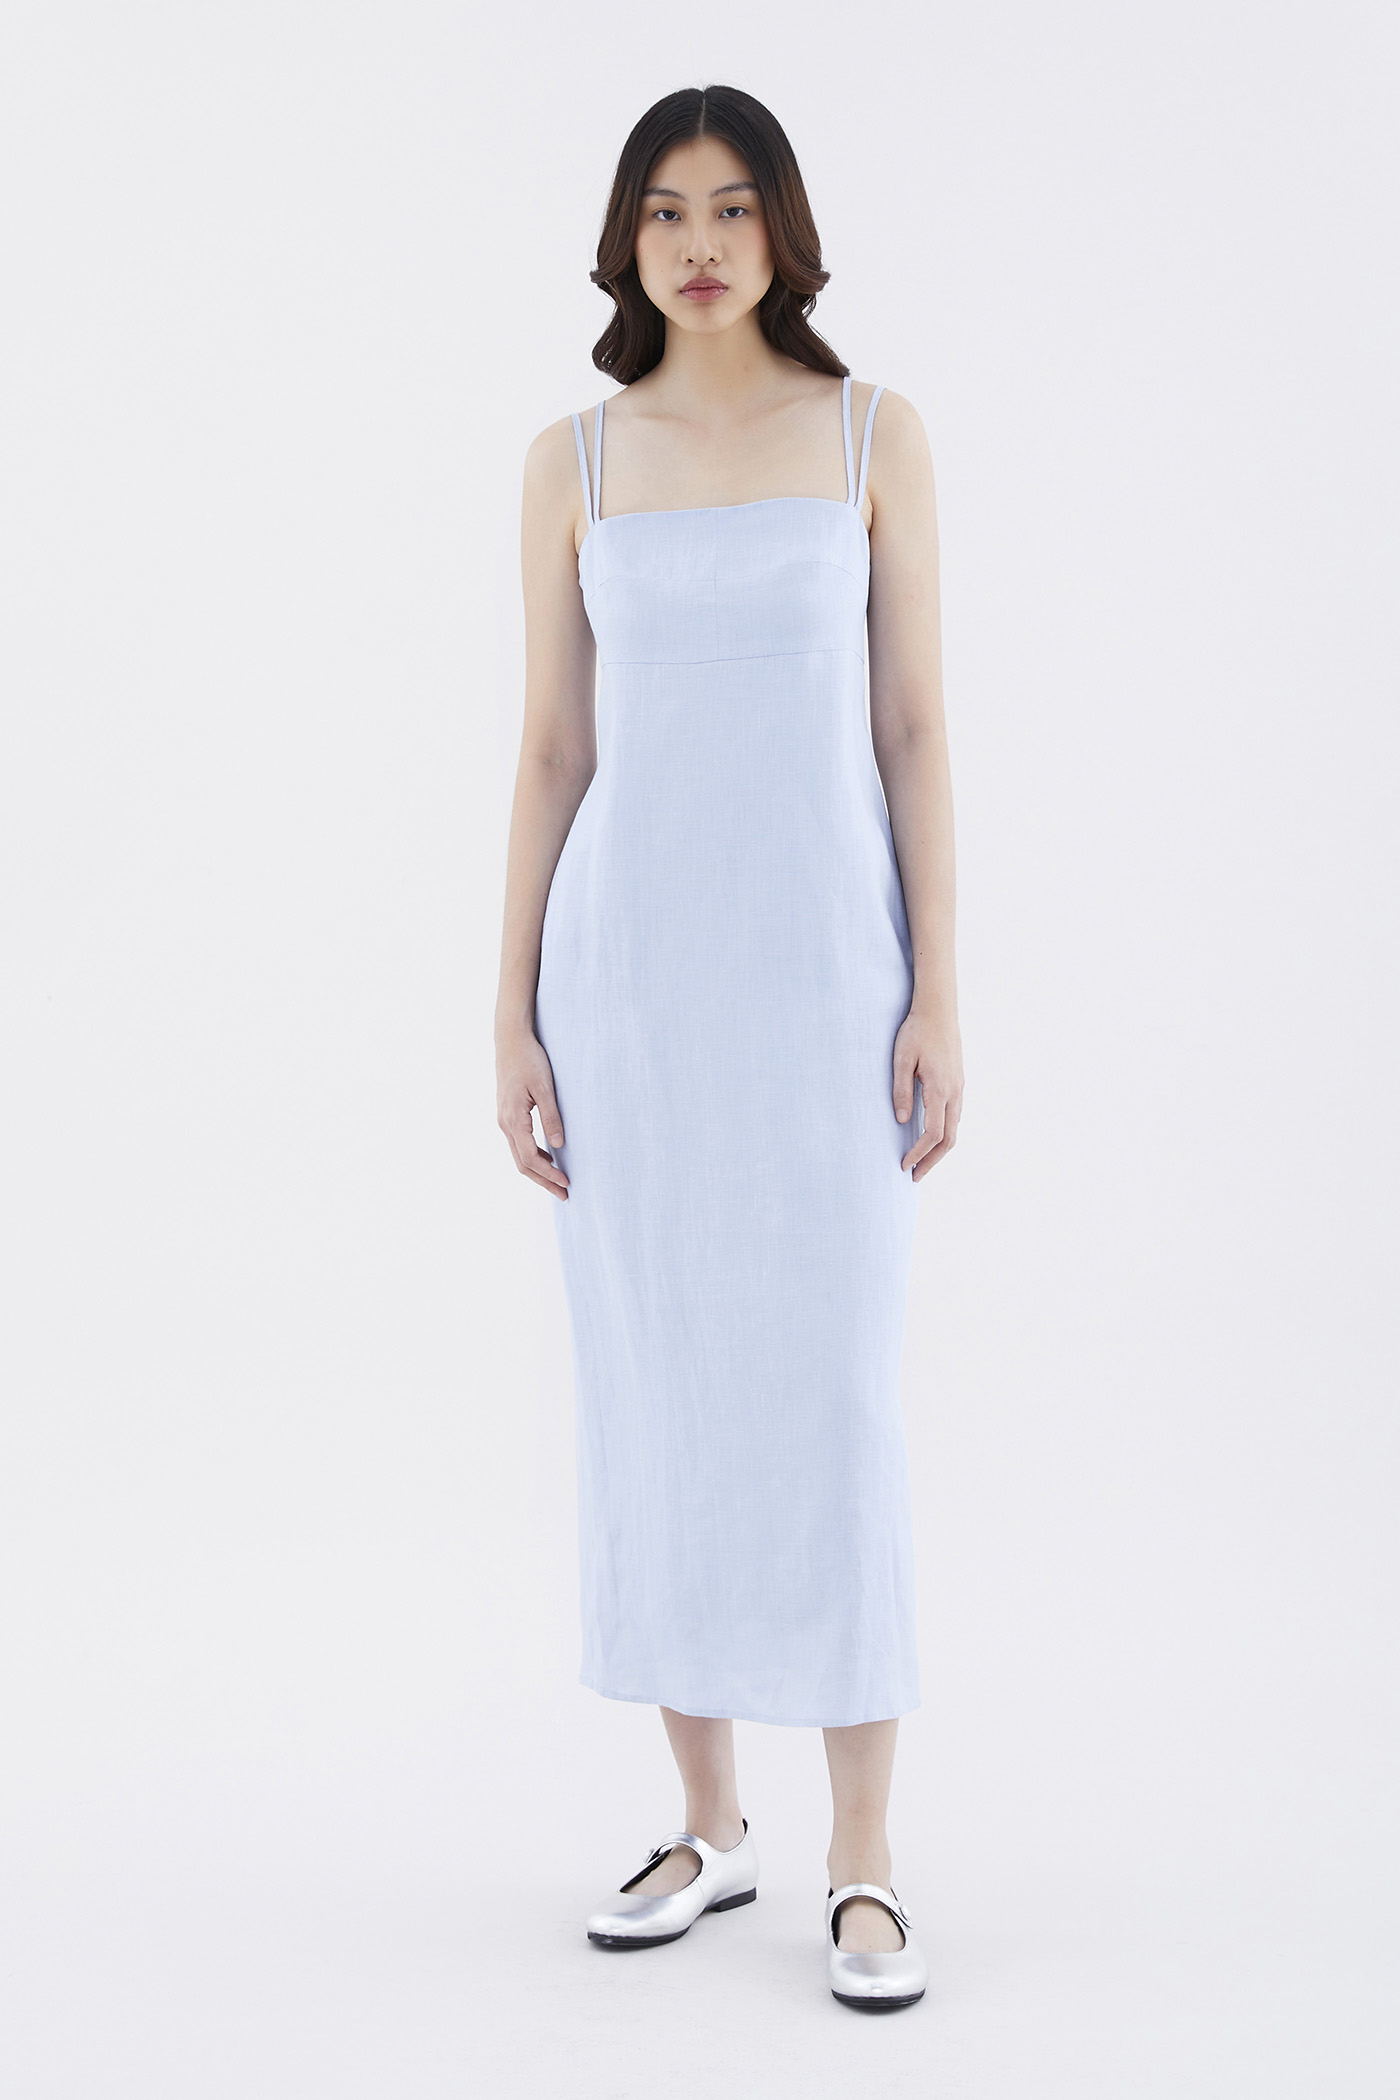 Erucia Linen Double-Strap Slit Dress